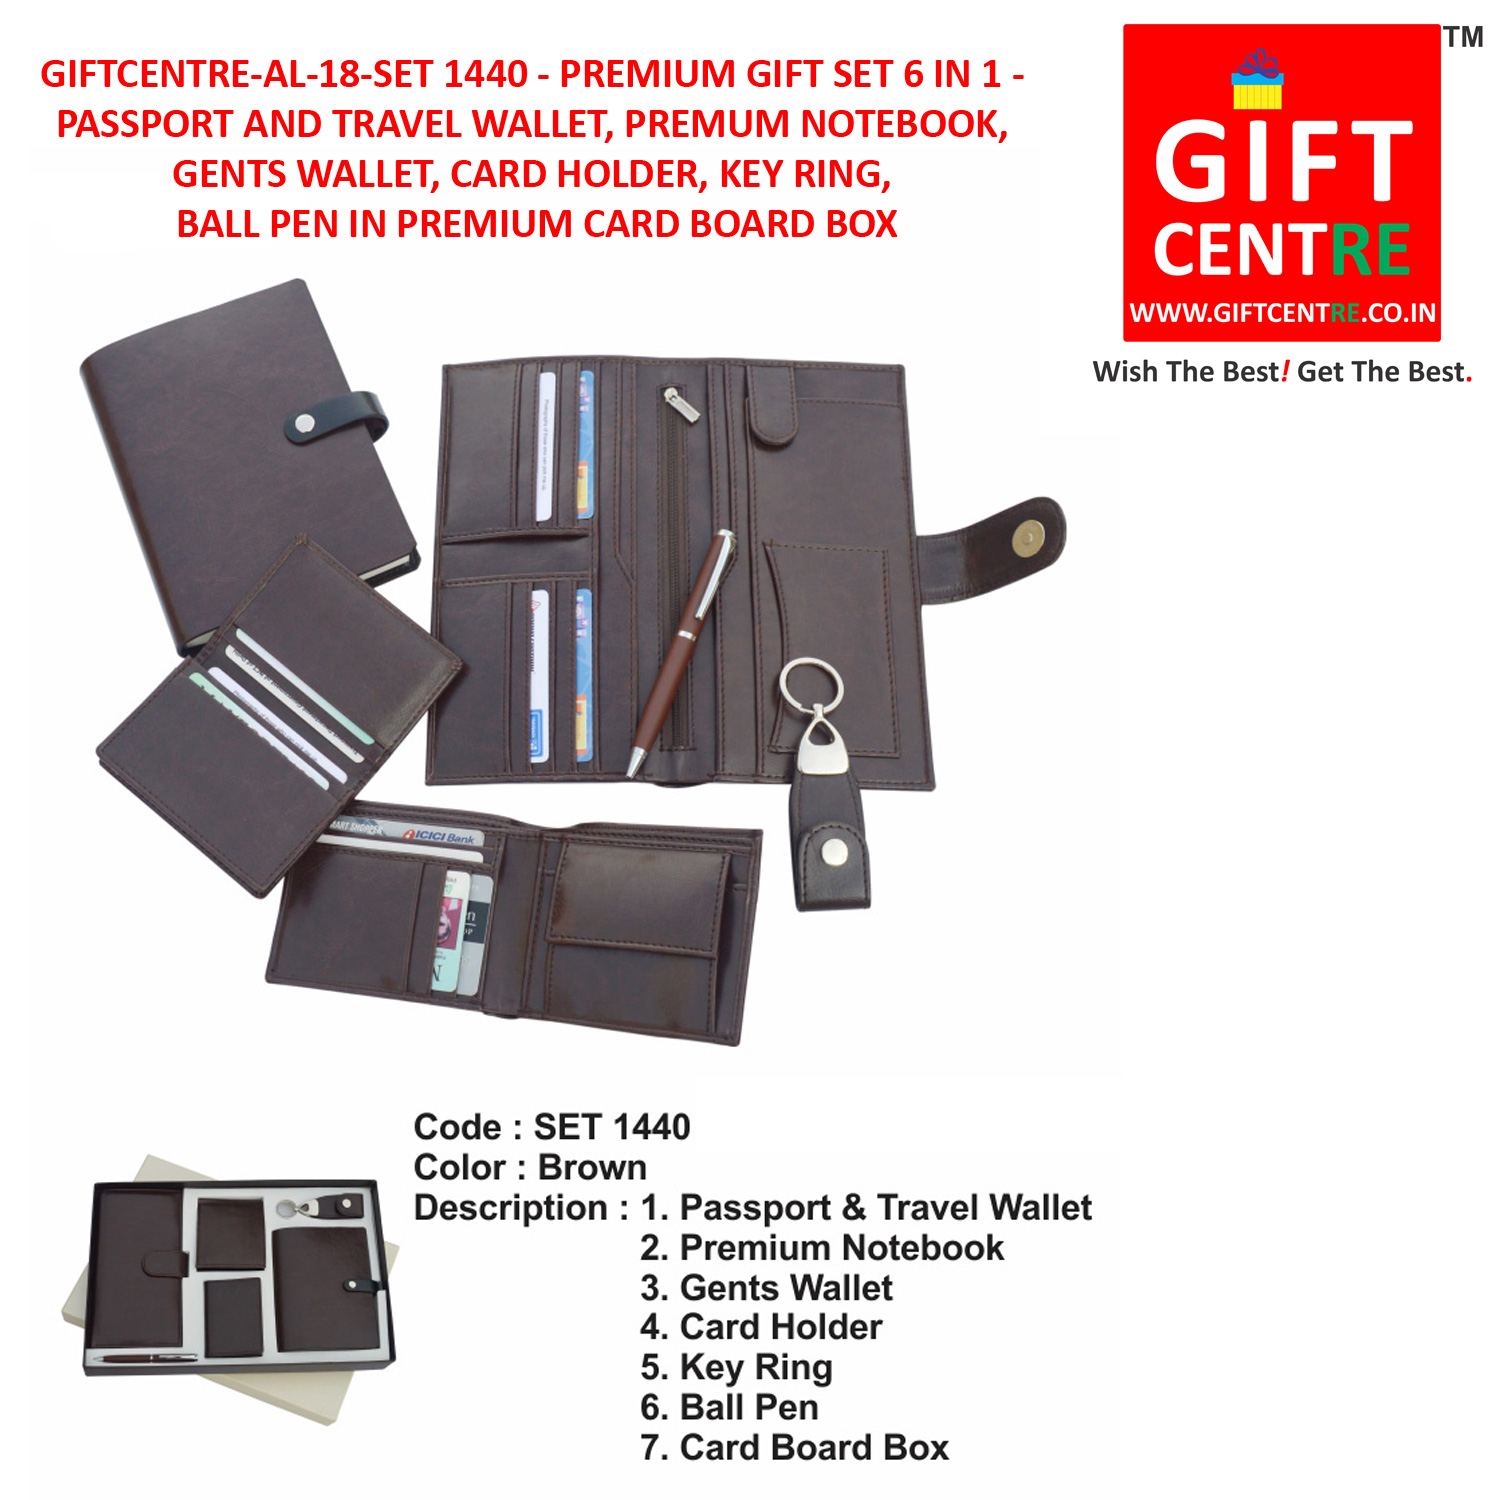 6 in 1 Premium gift set. Passport holder travel wallet Notebook Gents wallet Card holder Key ring Ball pen in Premium gift Box.